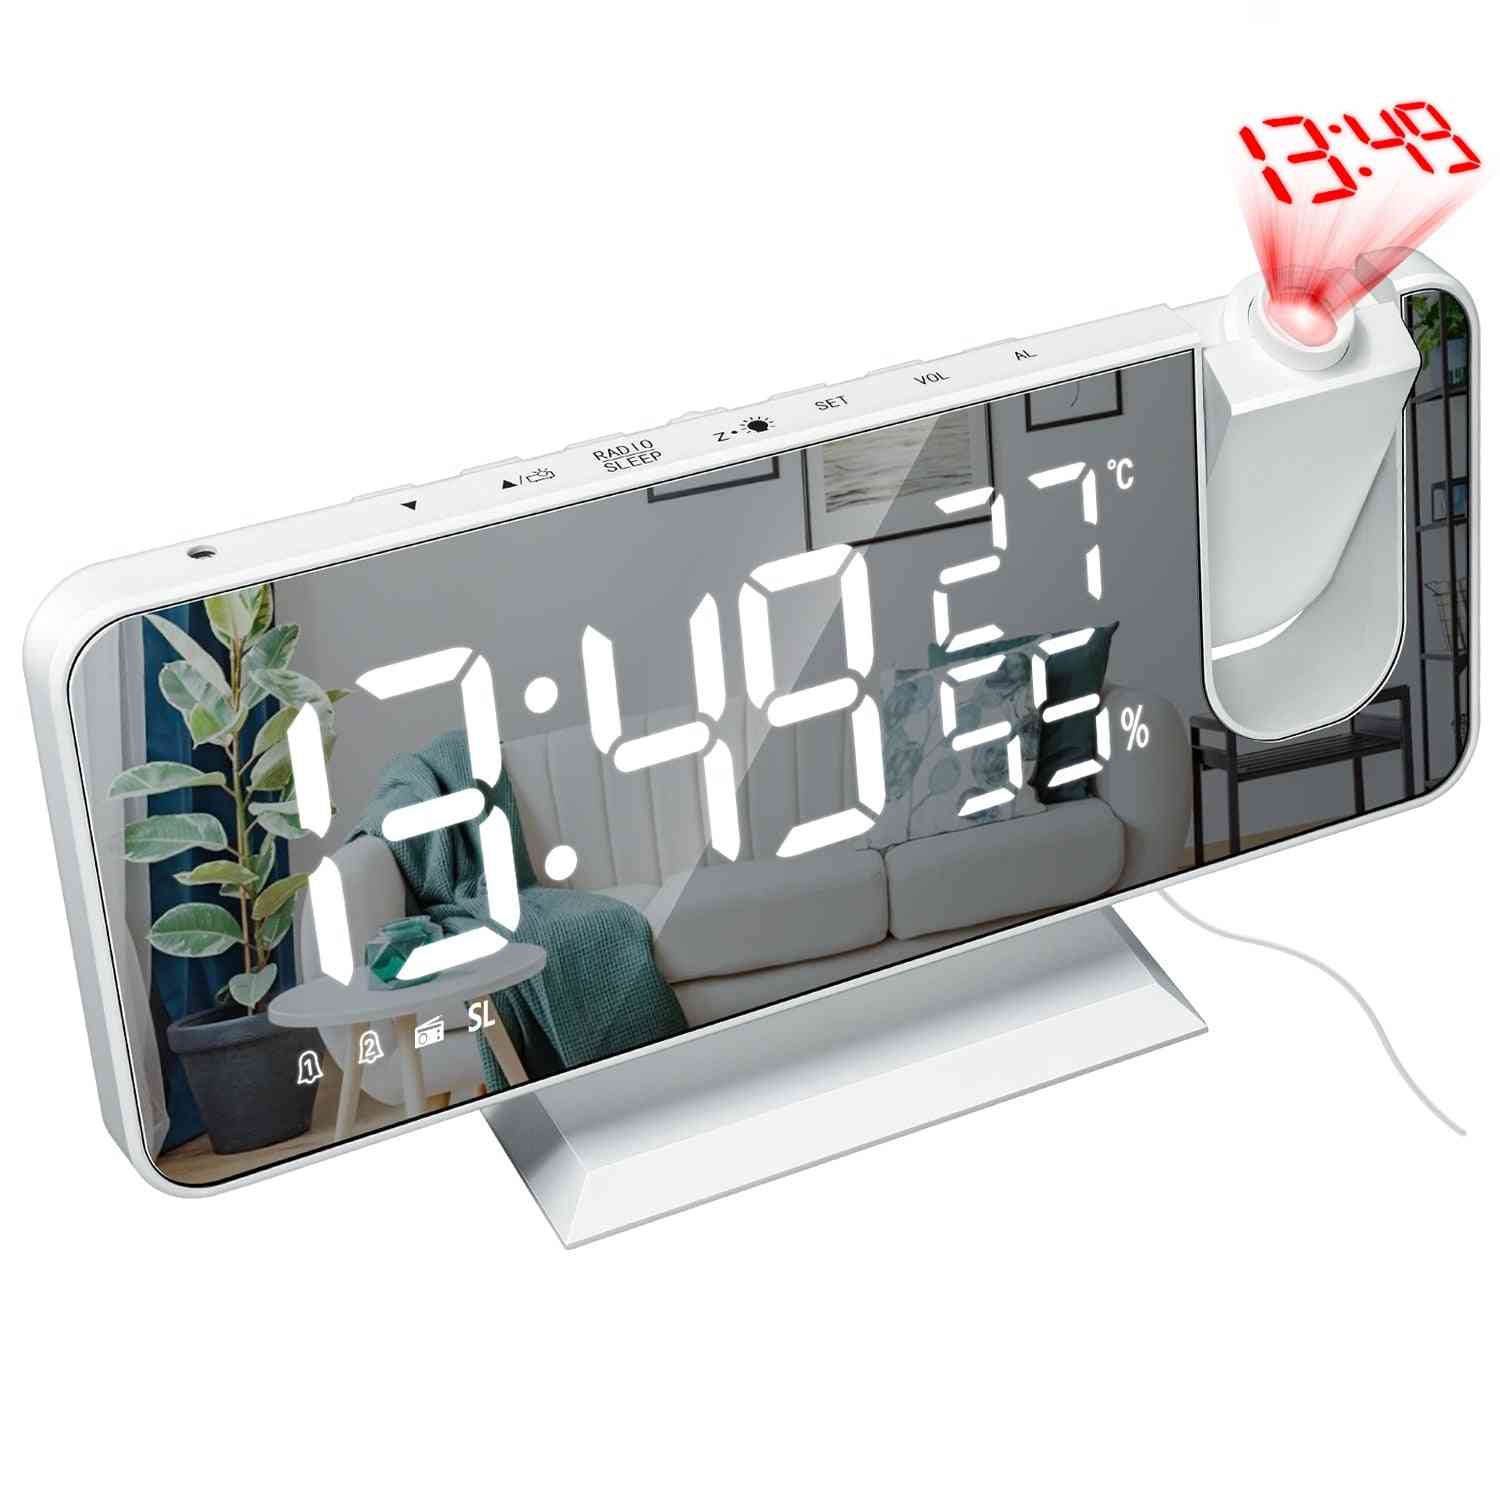 3d Projection Alarm Clock